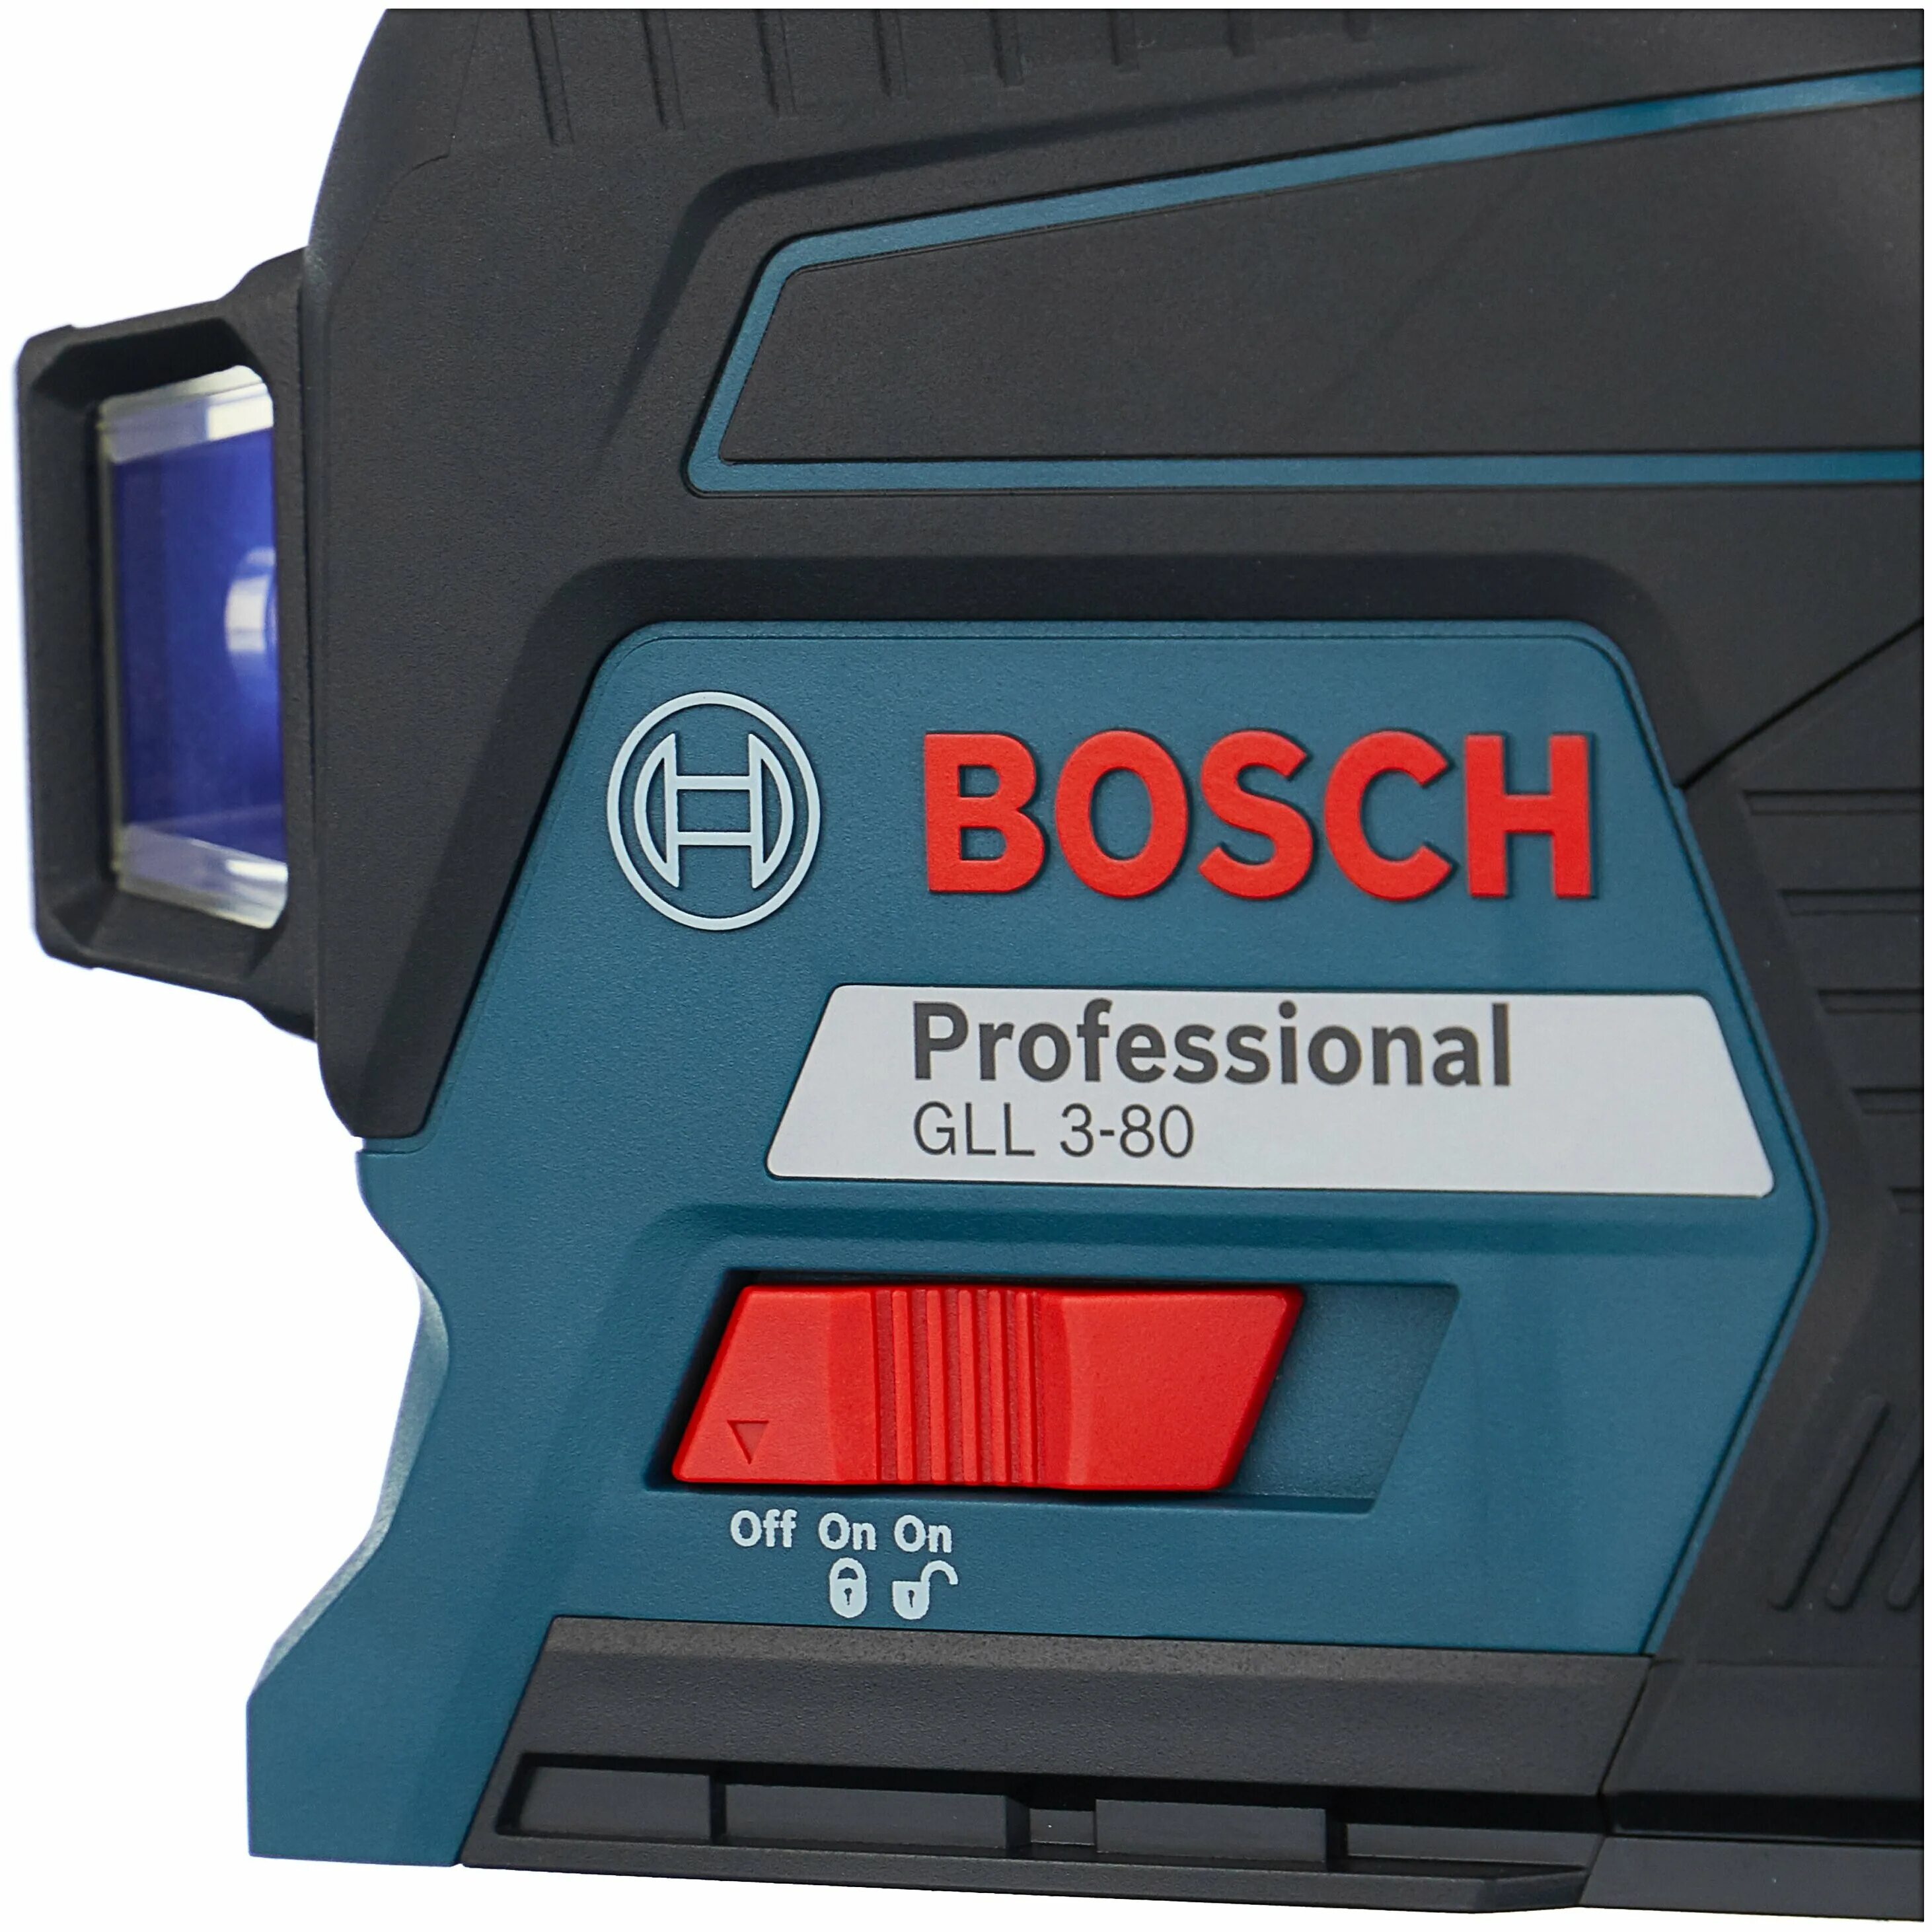 Уровень бош GLL 3-80. Bosch GLL 3-80 professional 0601063s00. Лазер бош GLL 3-80. Лазерный нивелир GLL 3-80 professional.